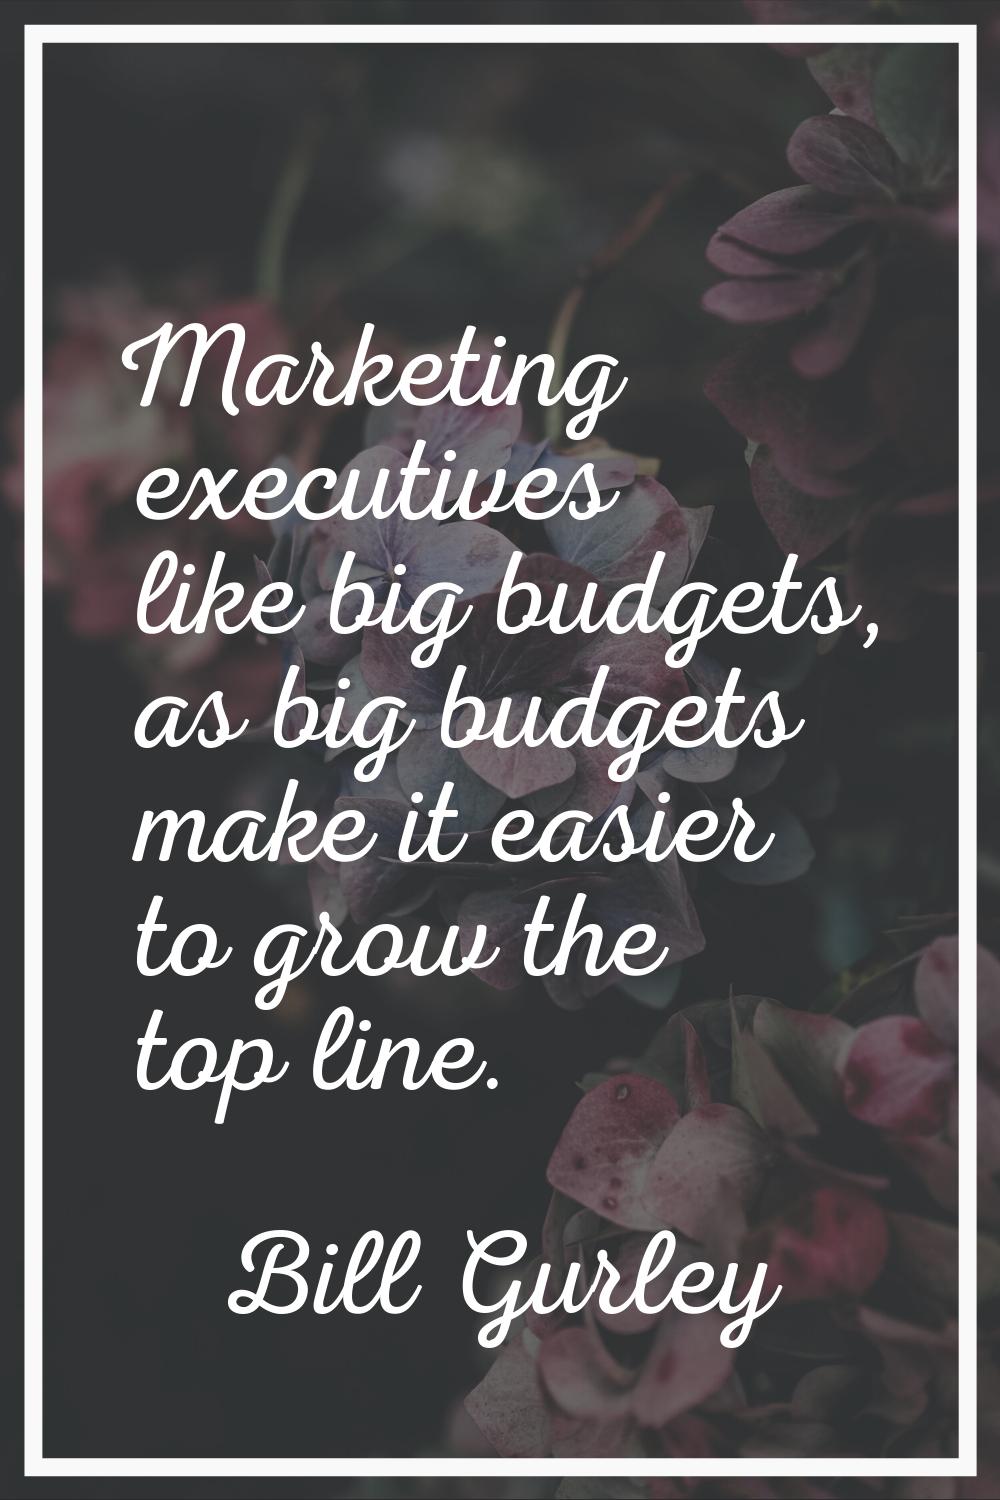 Marketing executives like big budgets, as big budgets make it easier to grow the top line.